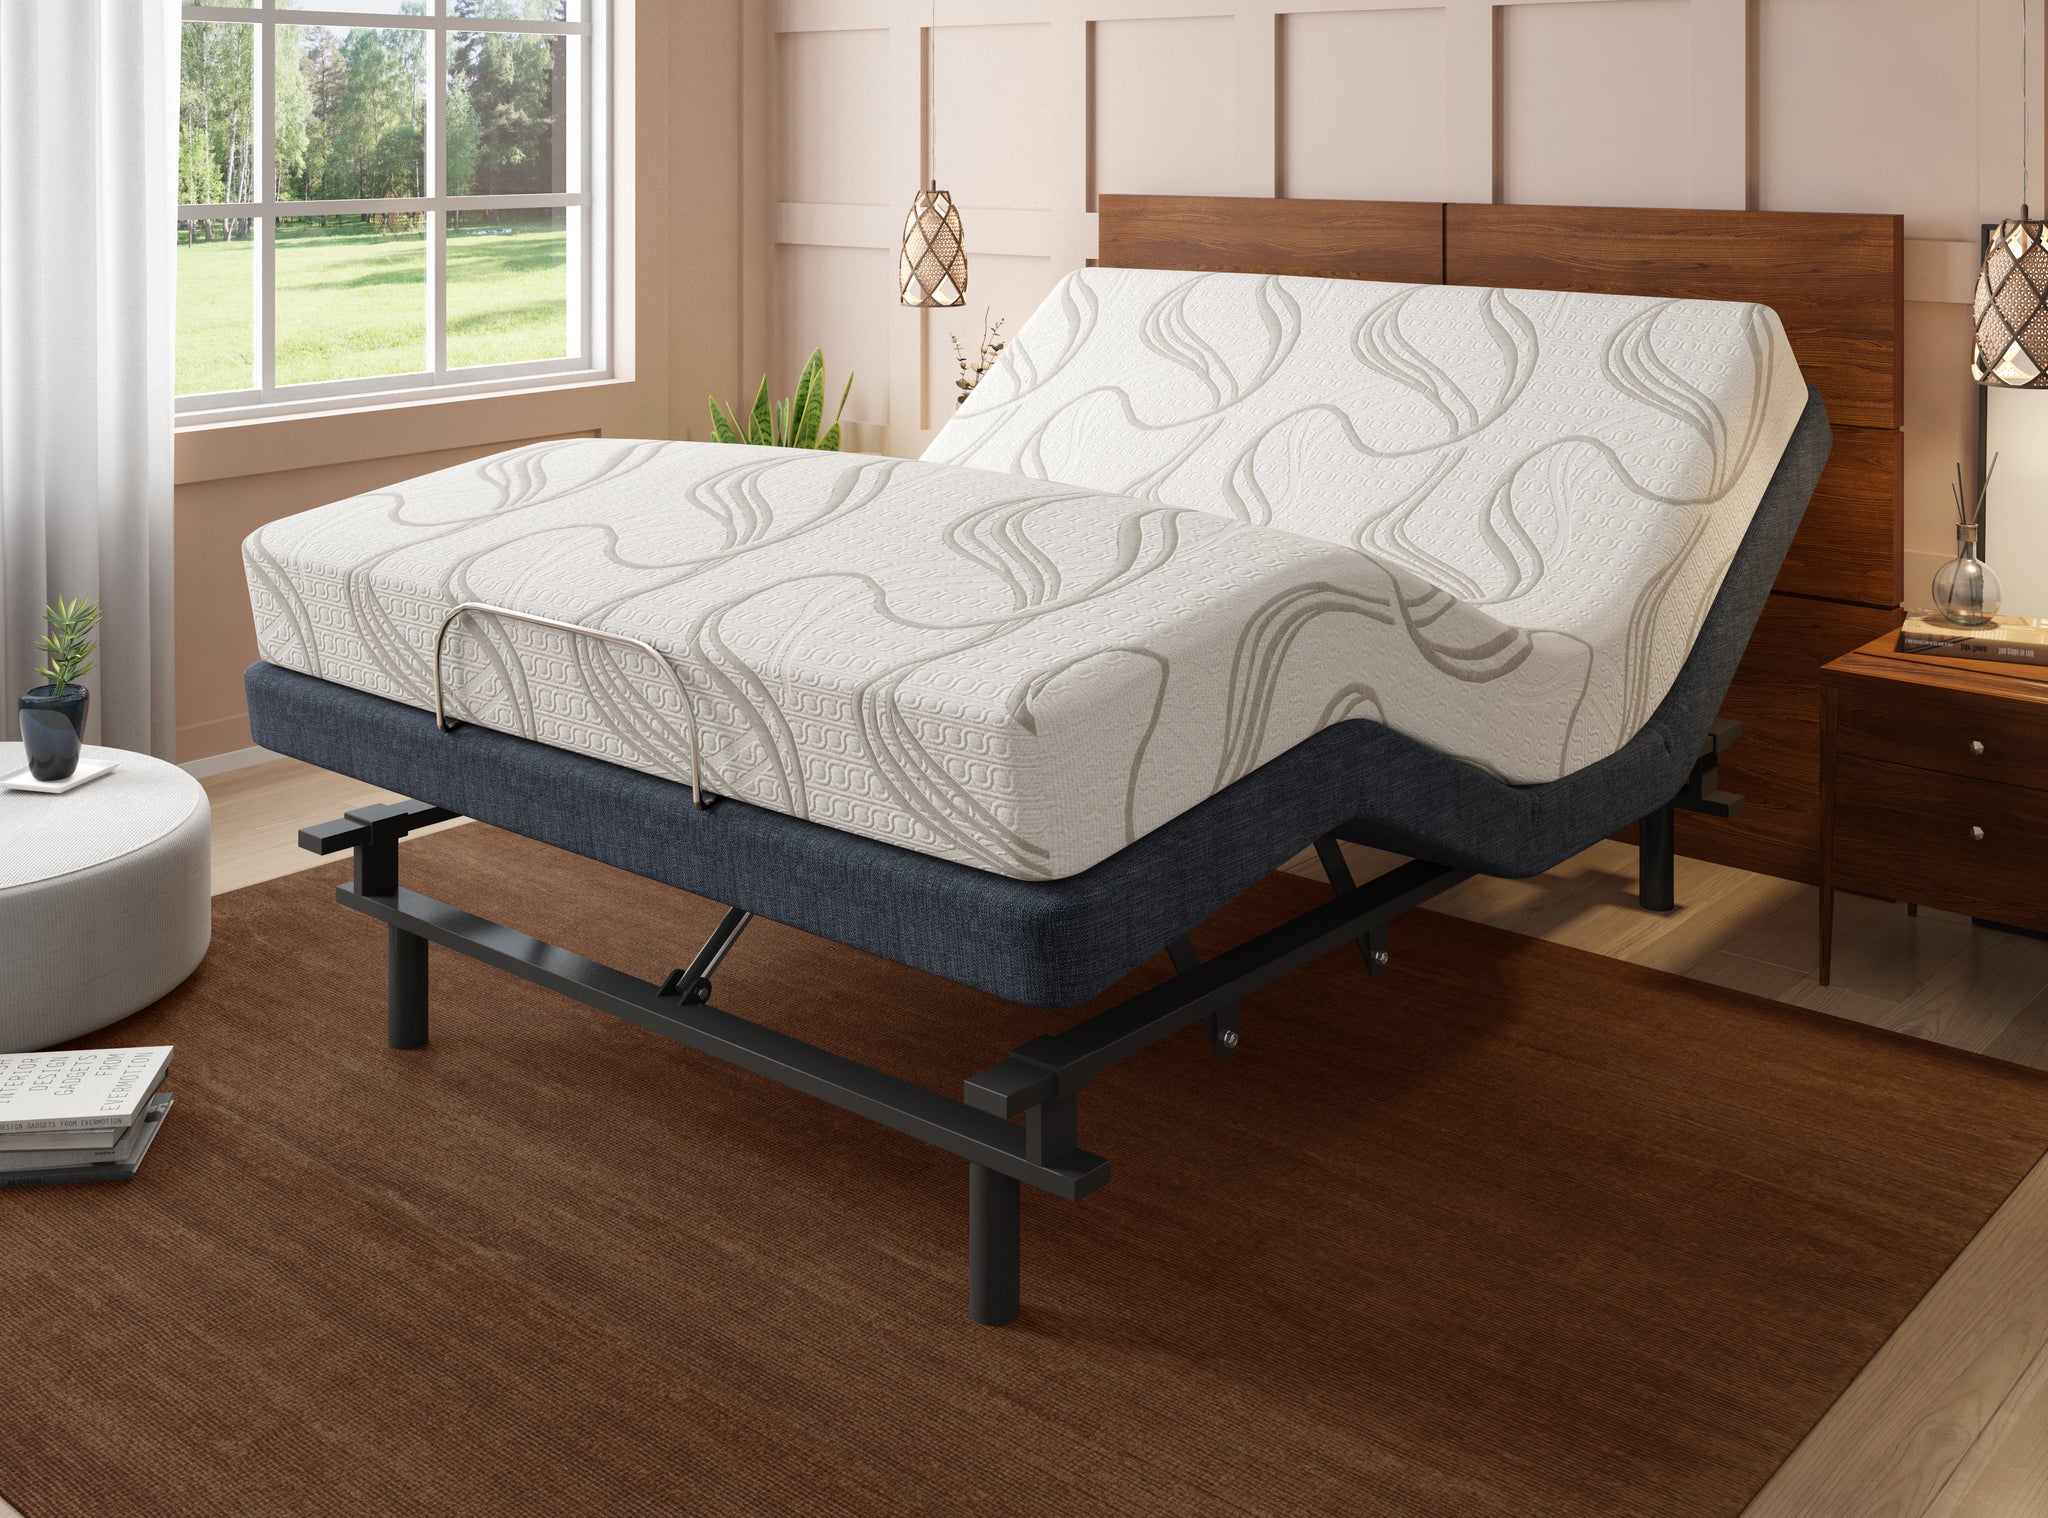 sleep systems mattress platinum